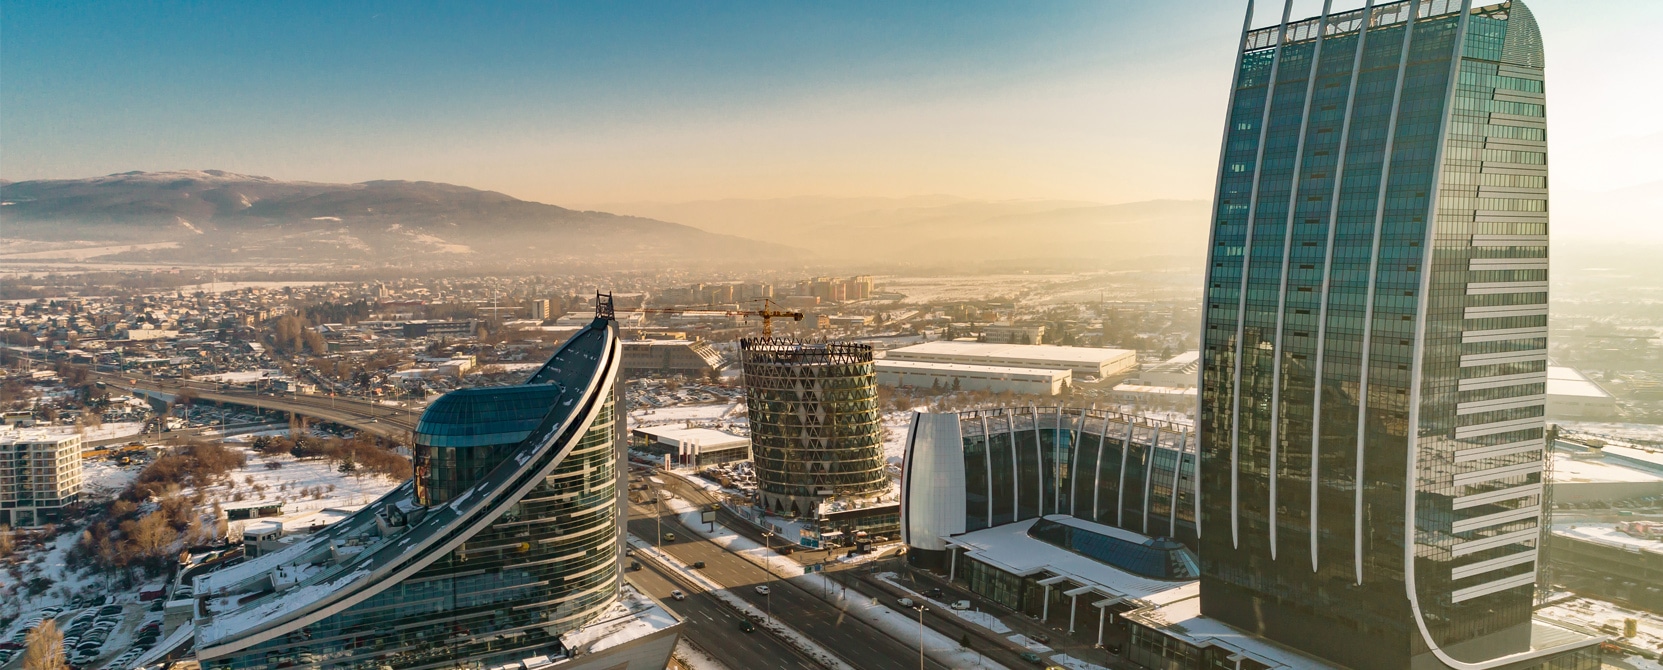 New terminal inaugurated in Sofia